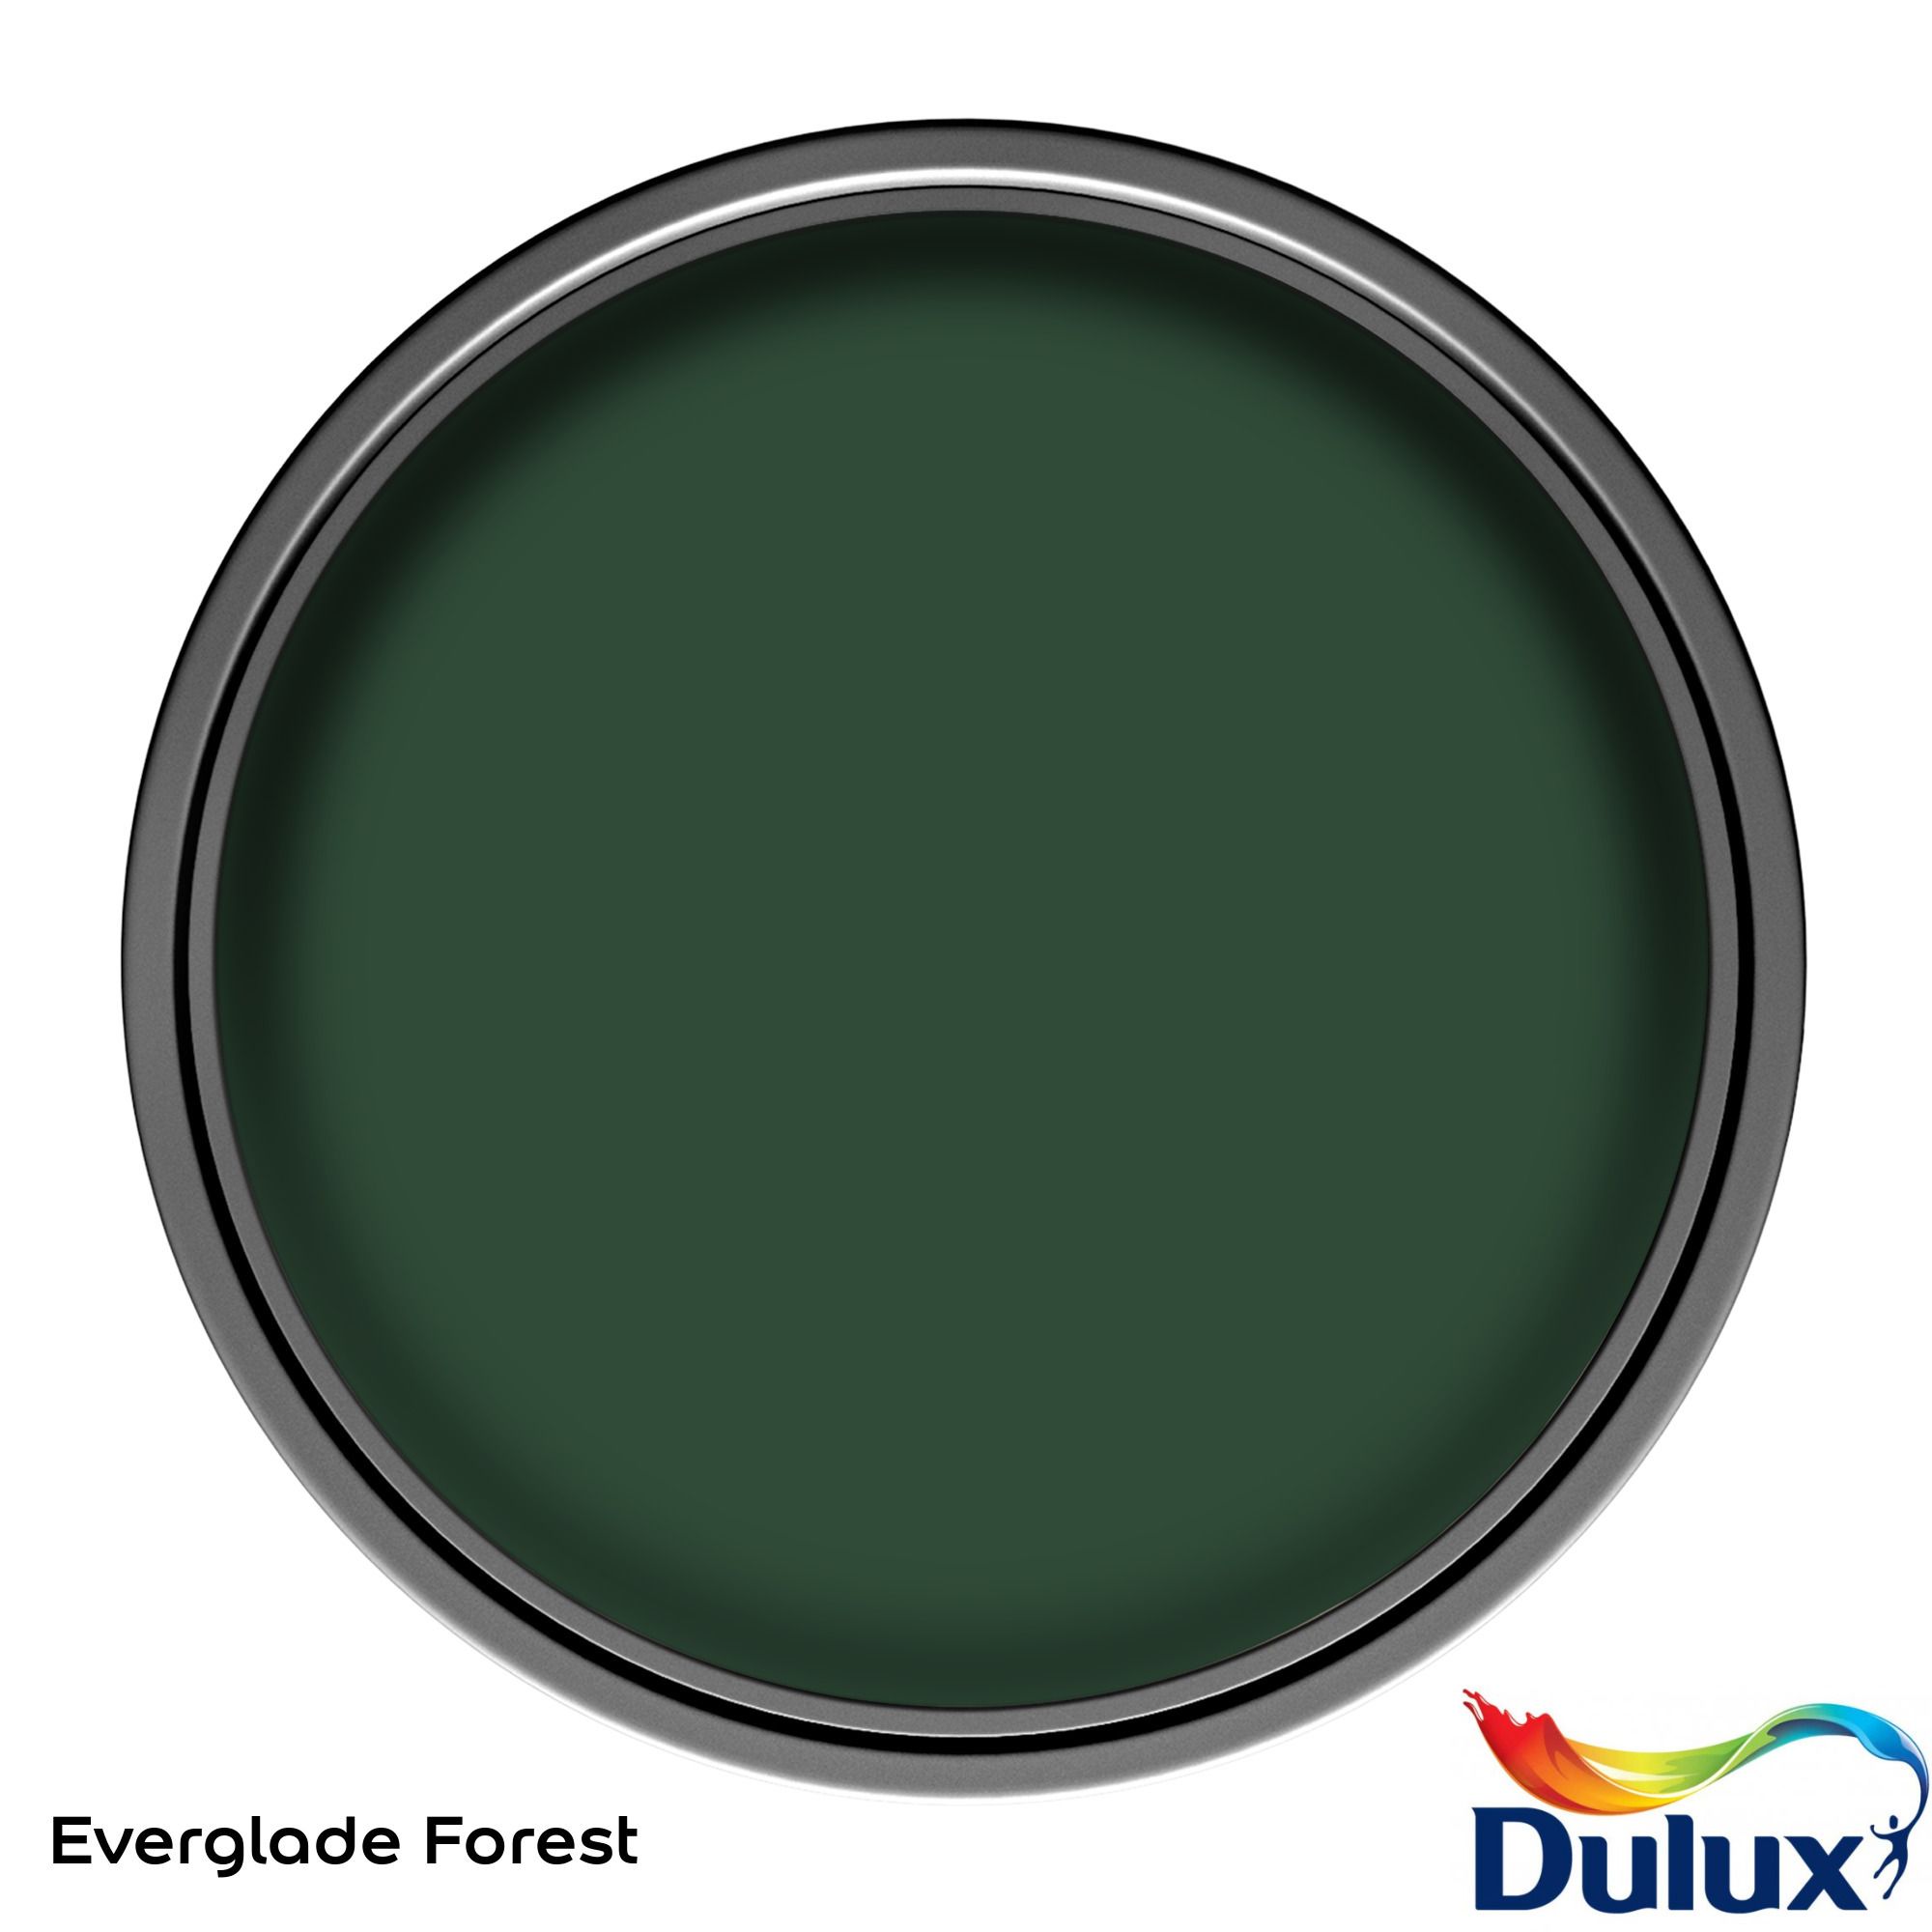 https://media.diy.com/is/image/Kingfisher/dulux-one-coat-everglade-forest-matt-emulsion-paint-1-25l~5010212659786_21c?$MOB_PREV$&$width=618&$height=618